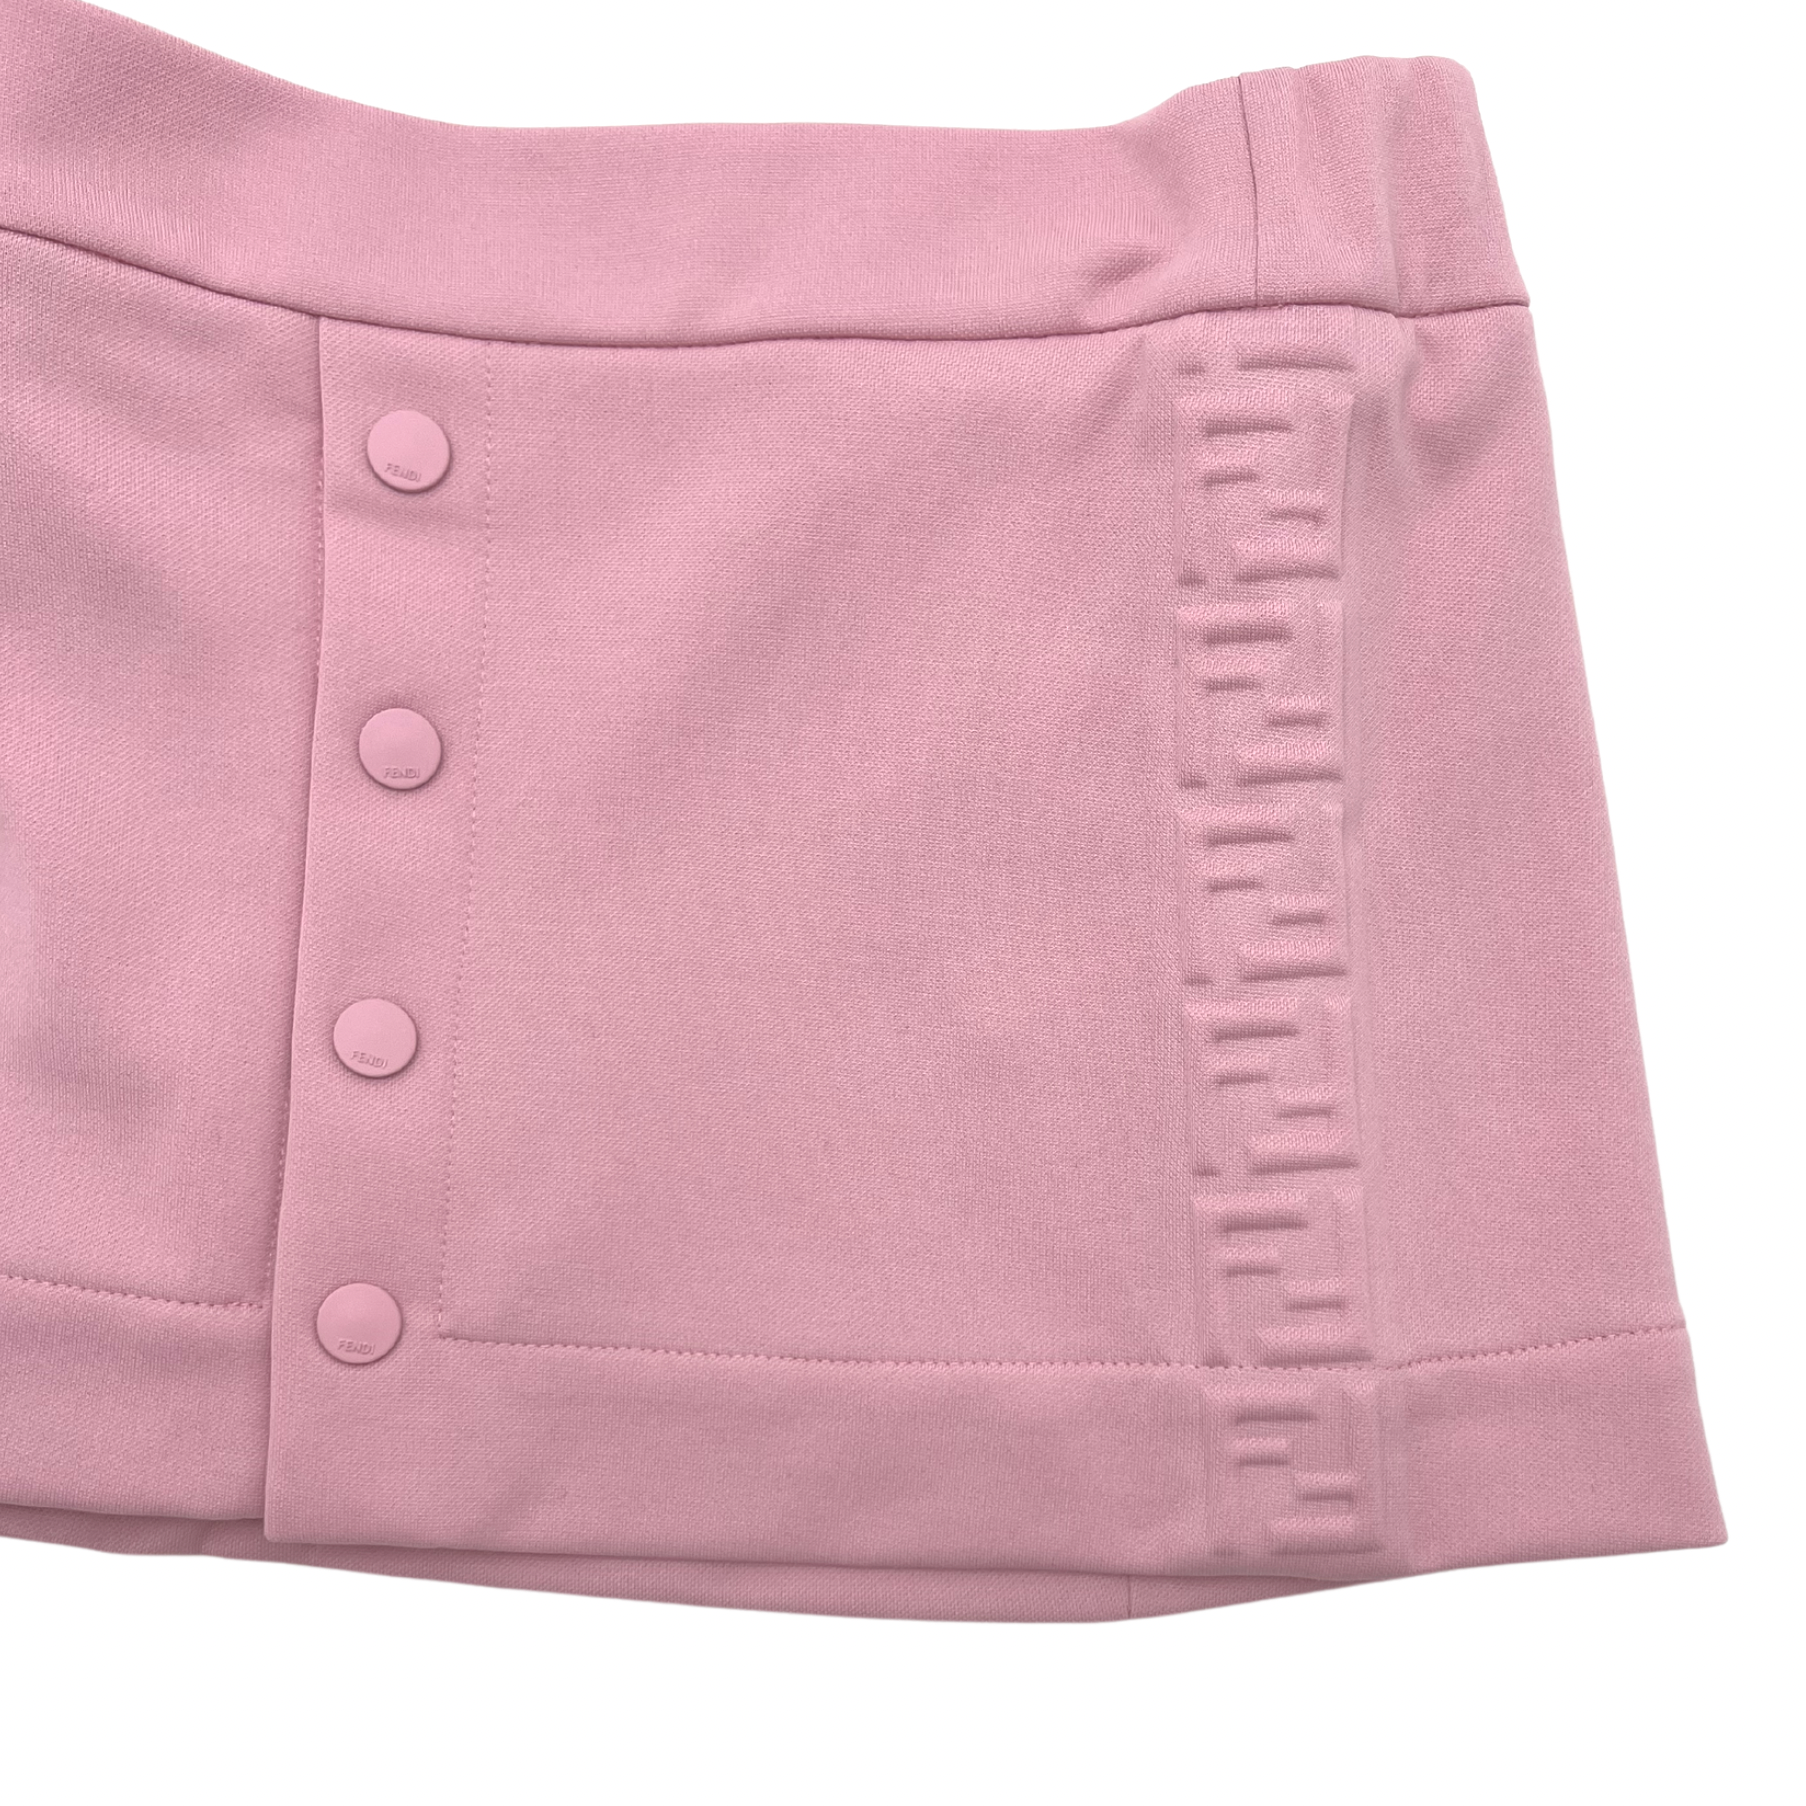 FENDI - Pink skirt - 3 years old